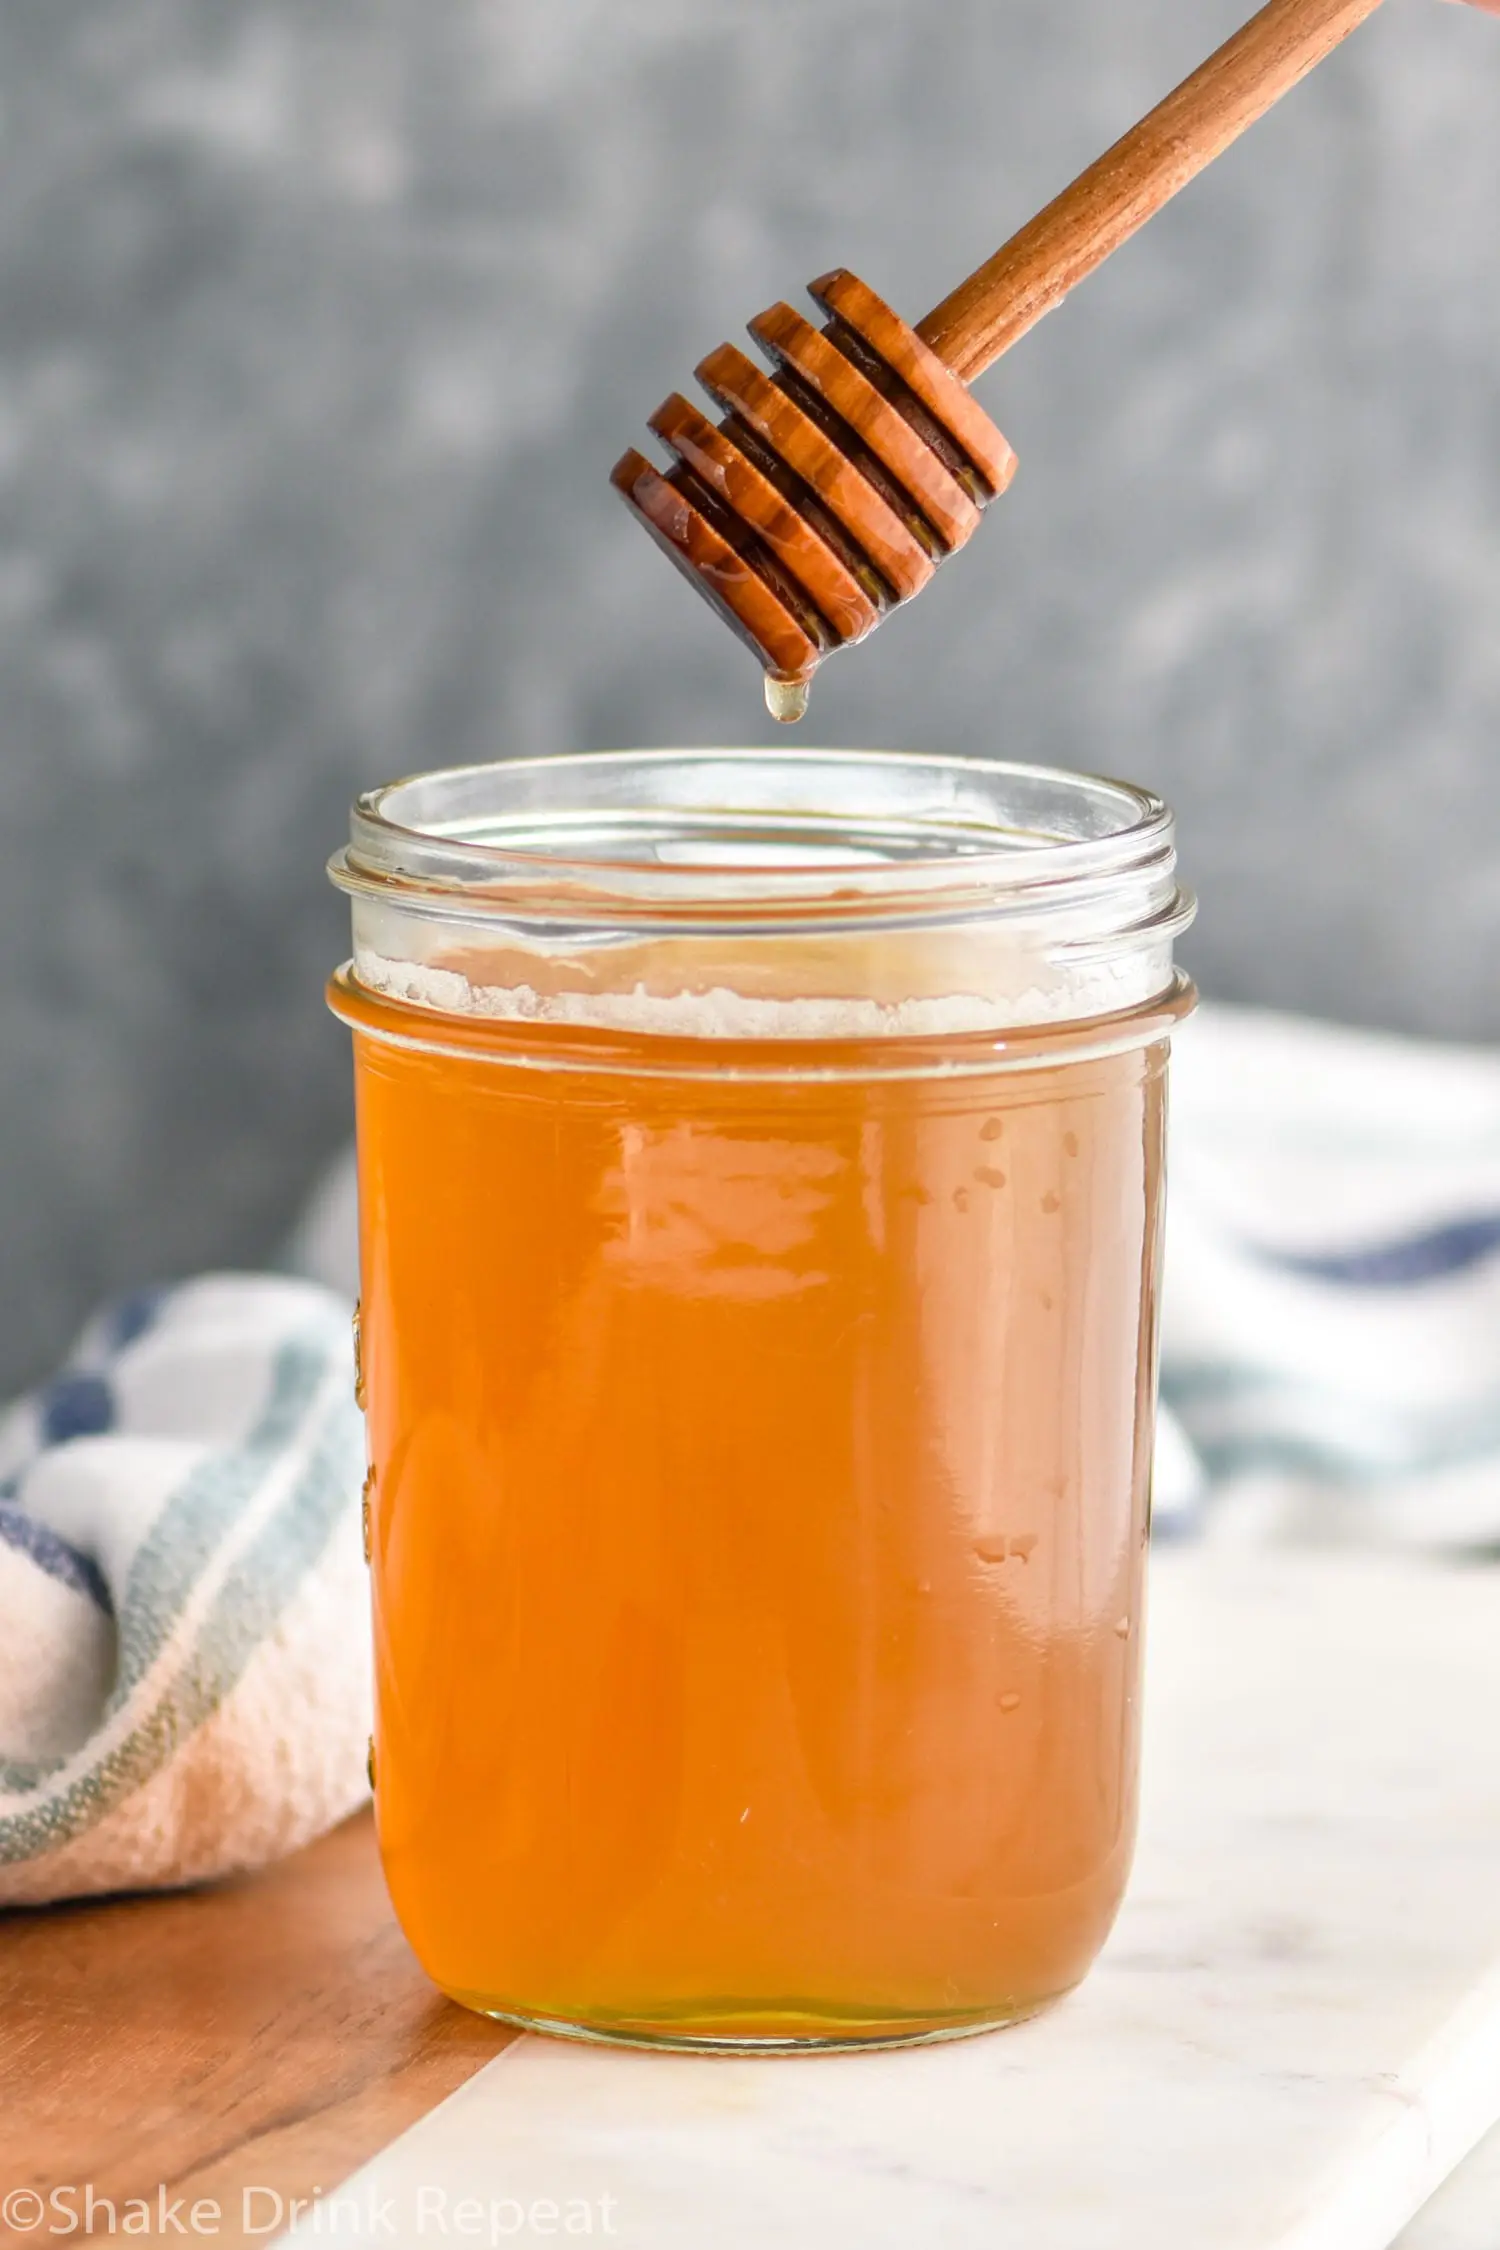 Jar of honey syrup recipe